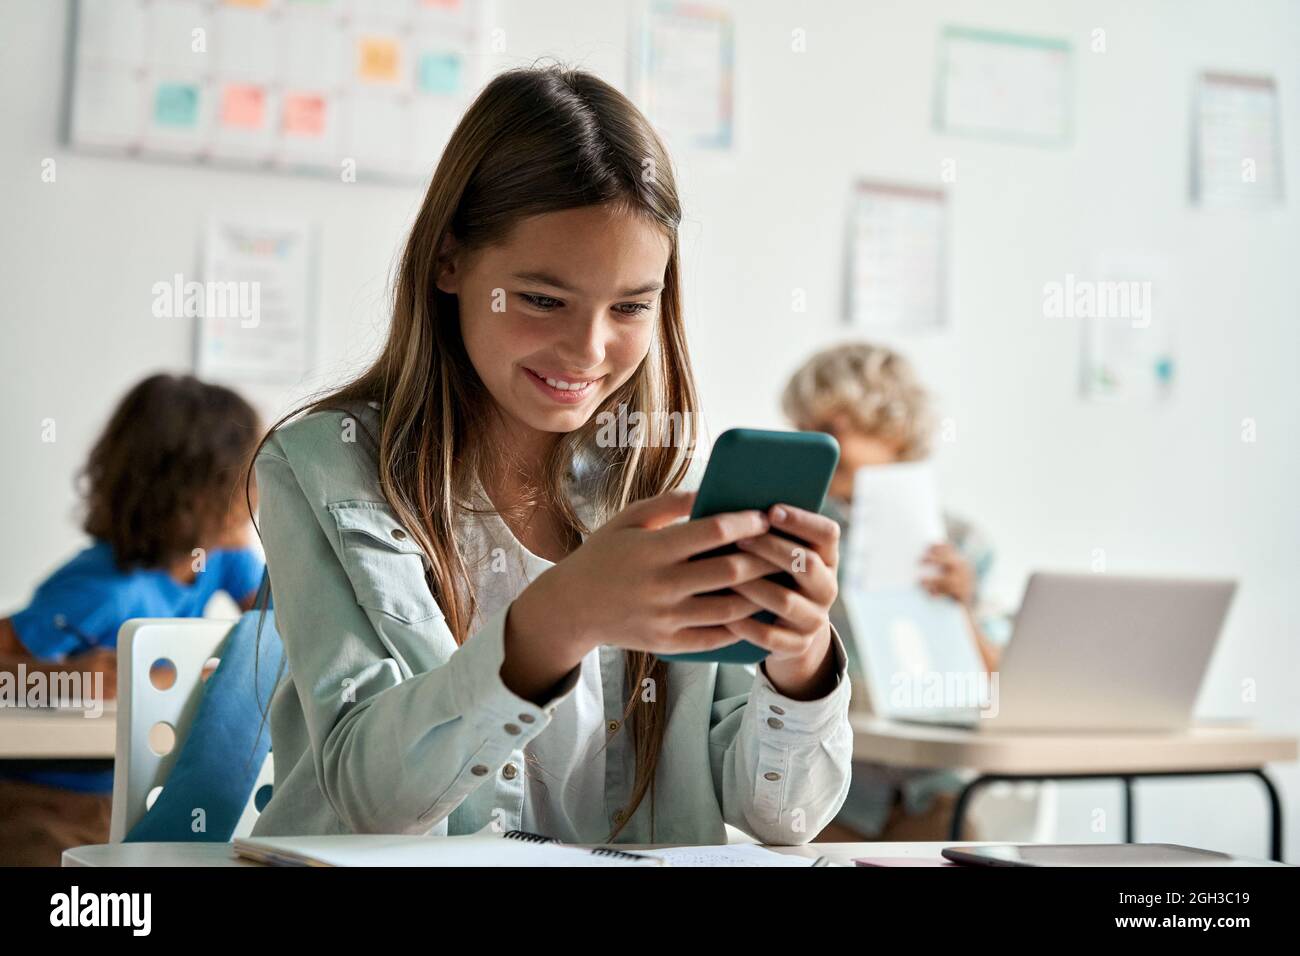 Happy latin hispanic kid girl school student using smartphone in classroom. Stock Photo